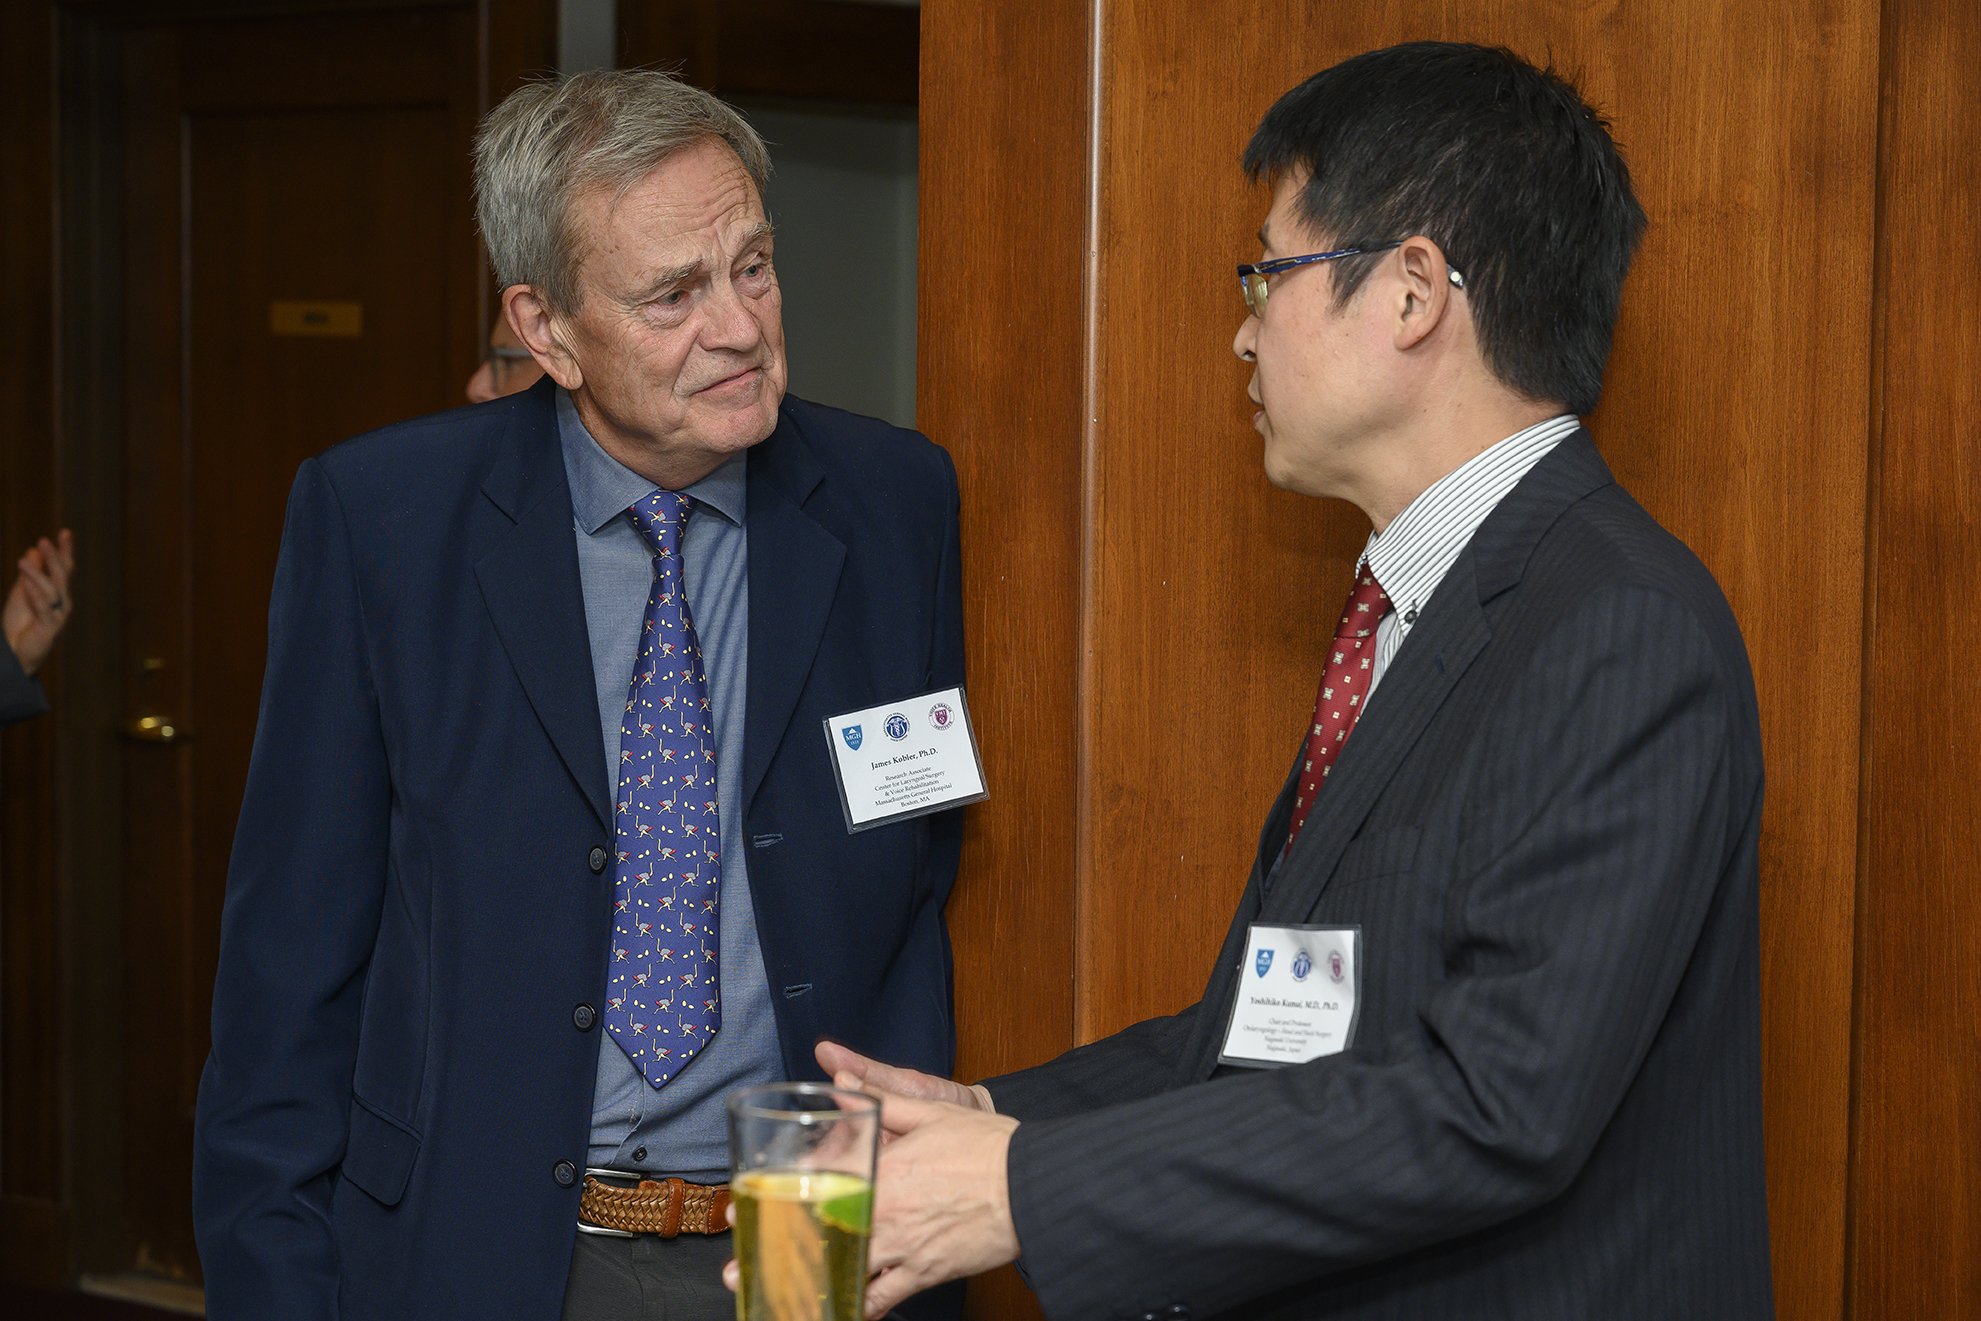 Drs. James Kobler and Yoshihiko Kumai